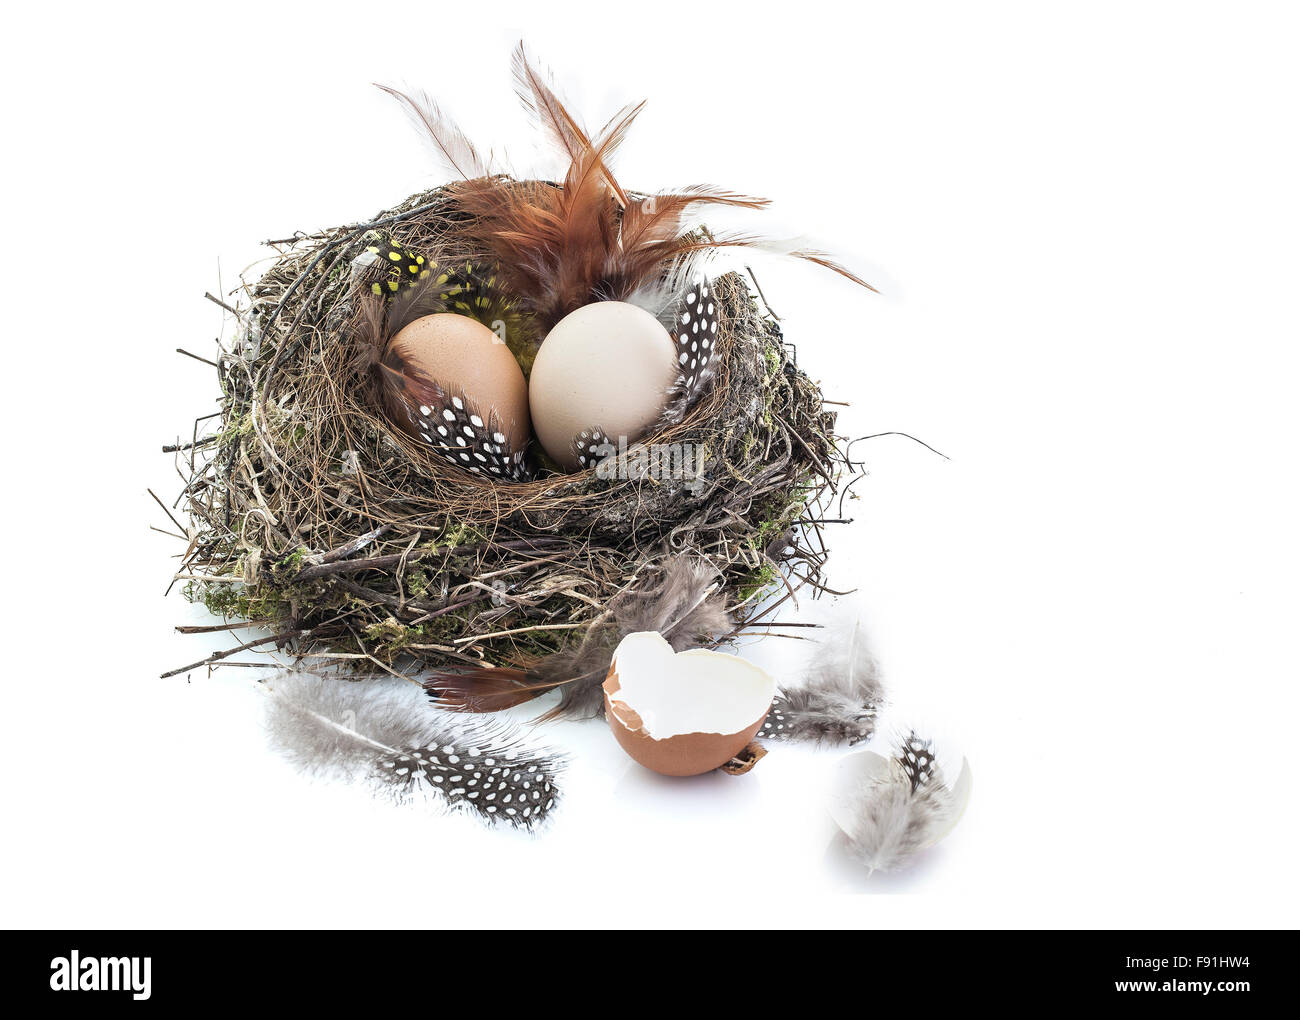 Bird nest with eggs on white background Stock Photo